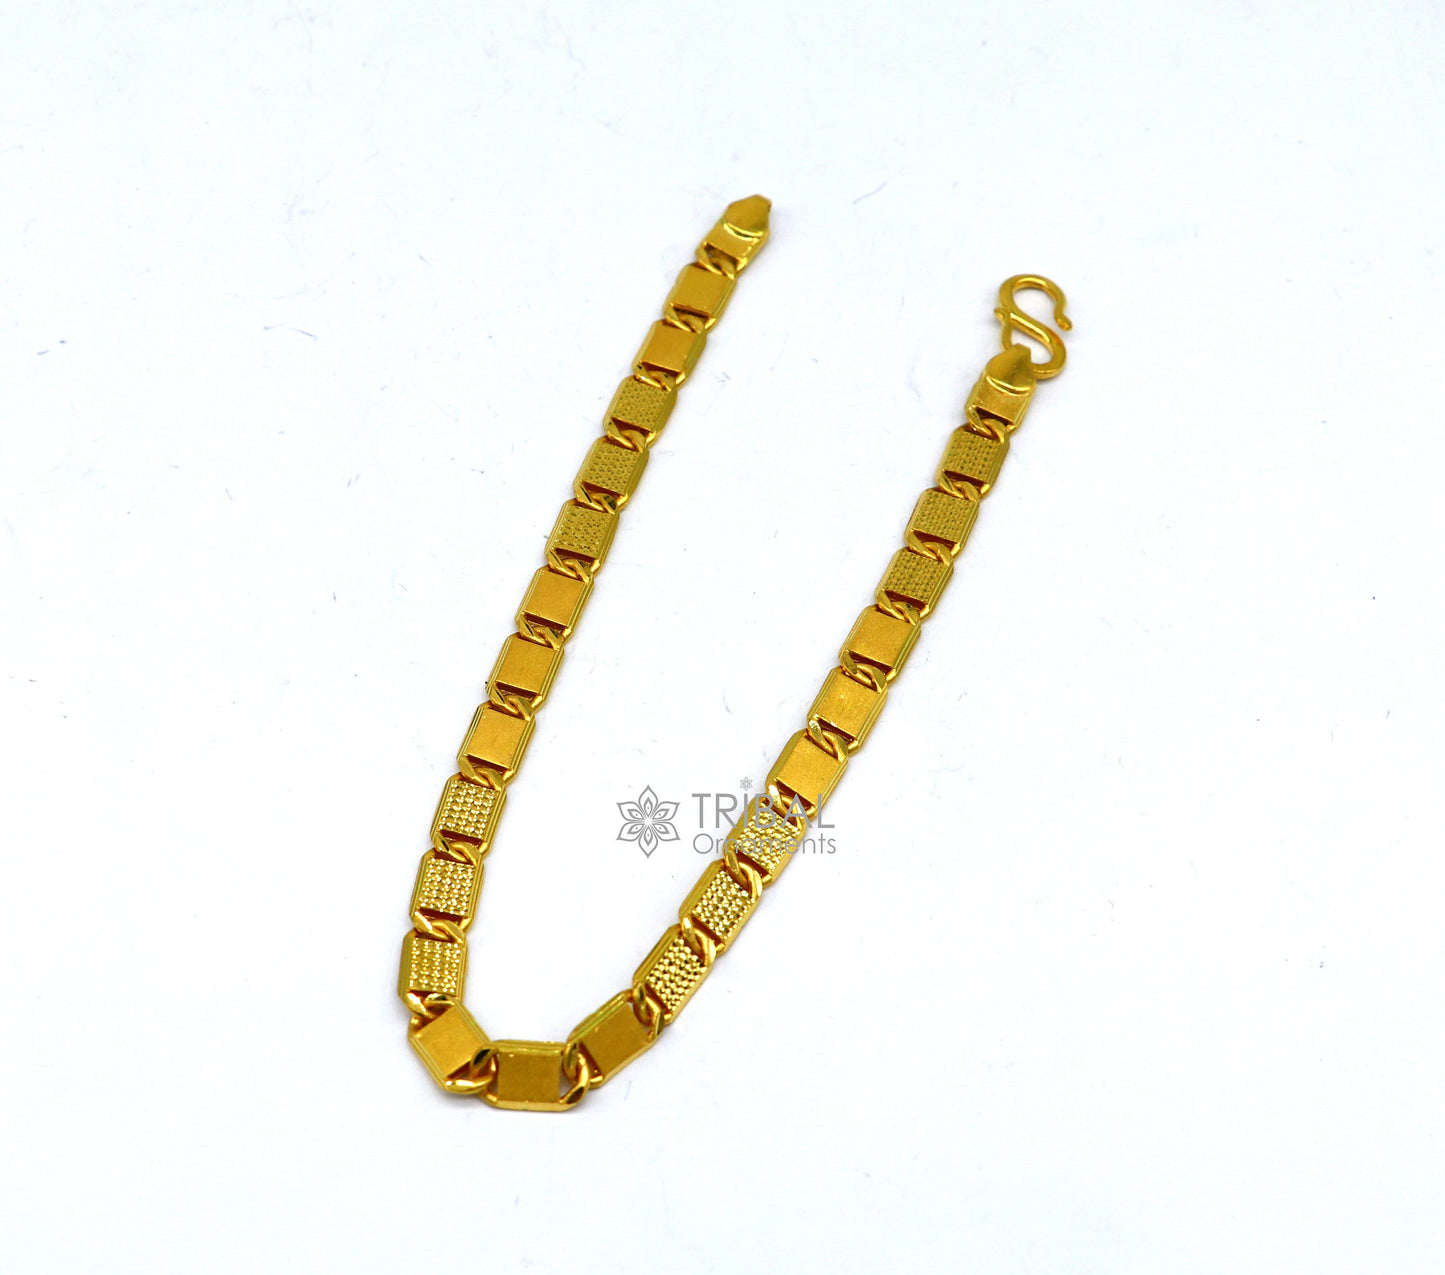 Genuine 22kt yellow gold handmade gold bar Royal Nawabi Chain Bracelet fabulous diamond cut design Best gifting men's jewelry Gbr43 - TRIBAL ORNAMENTS